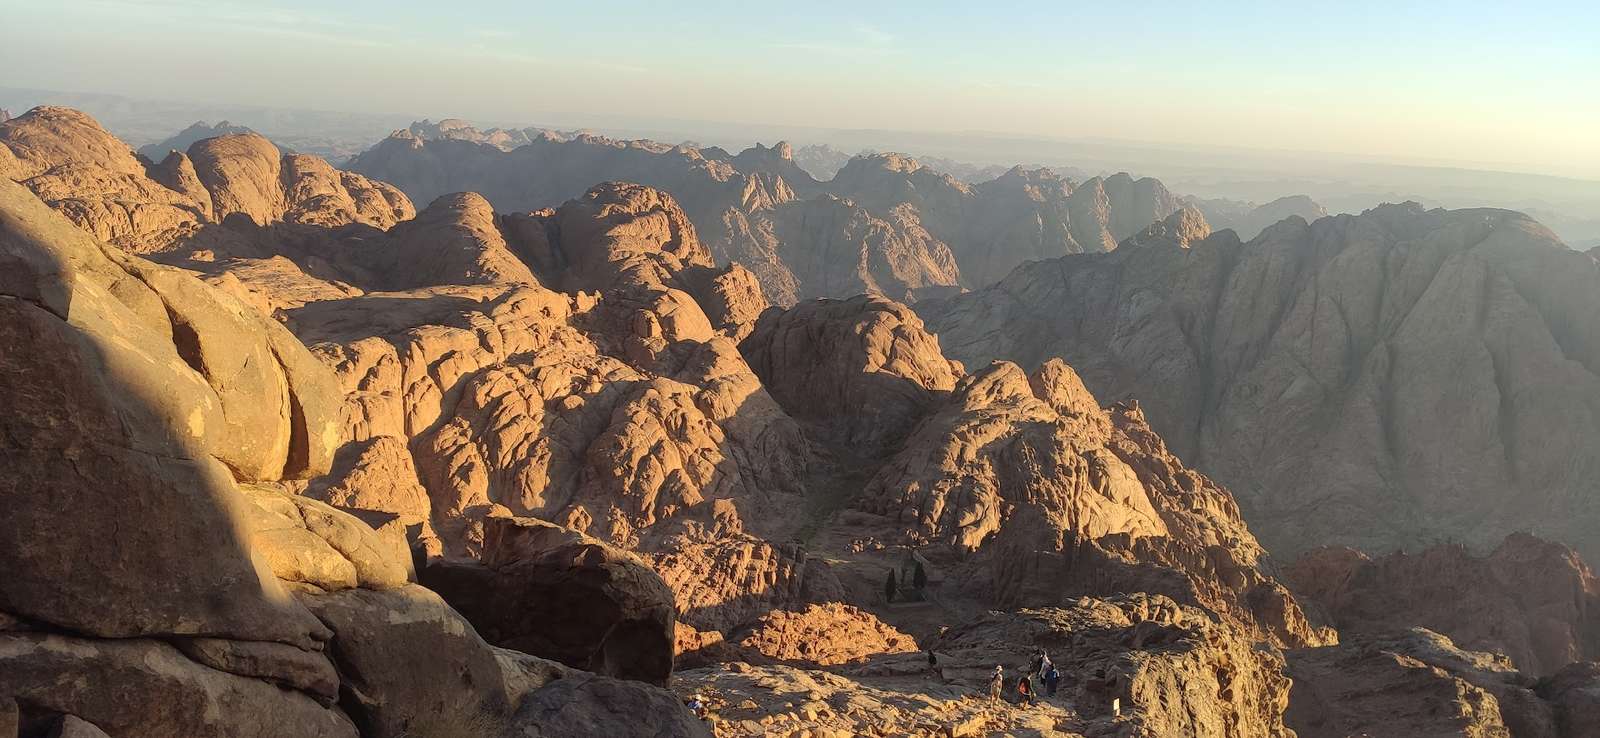 Sinai Peninsula. Mountain of Moses jigsaw puzzle online